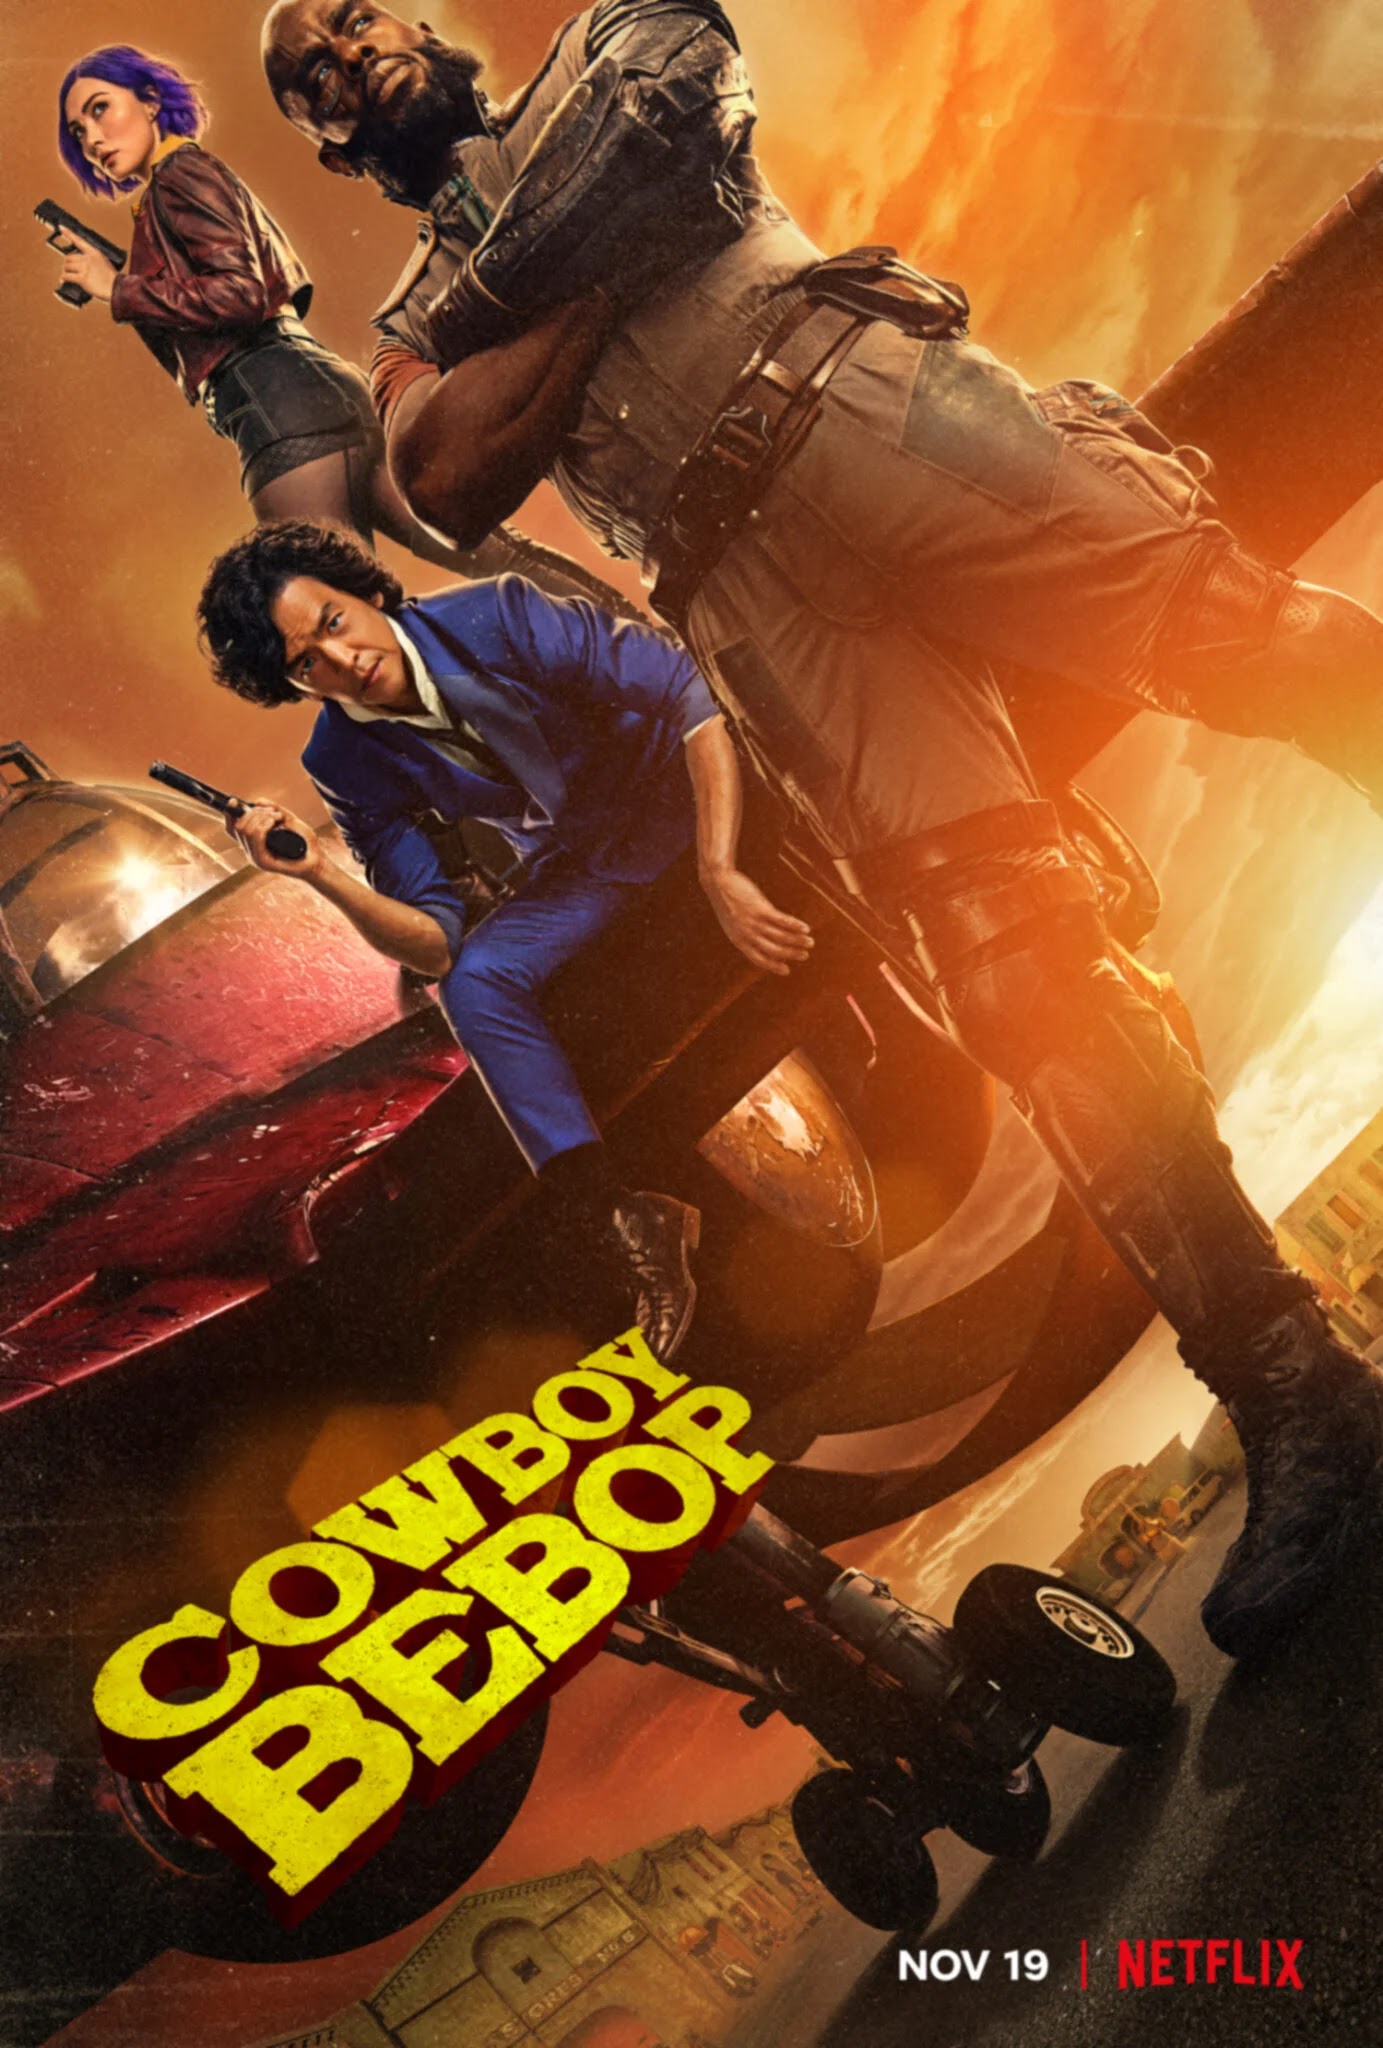 A Live-action de Cowboy Bebop é Cancelada após a Primeira Temporada